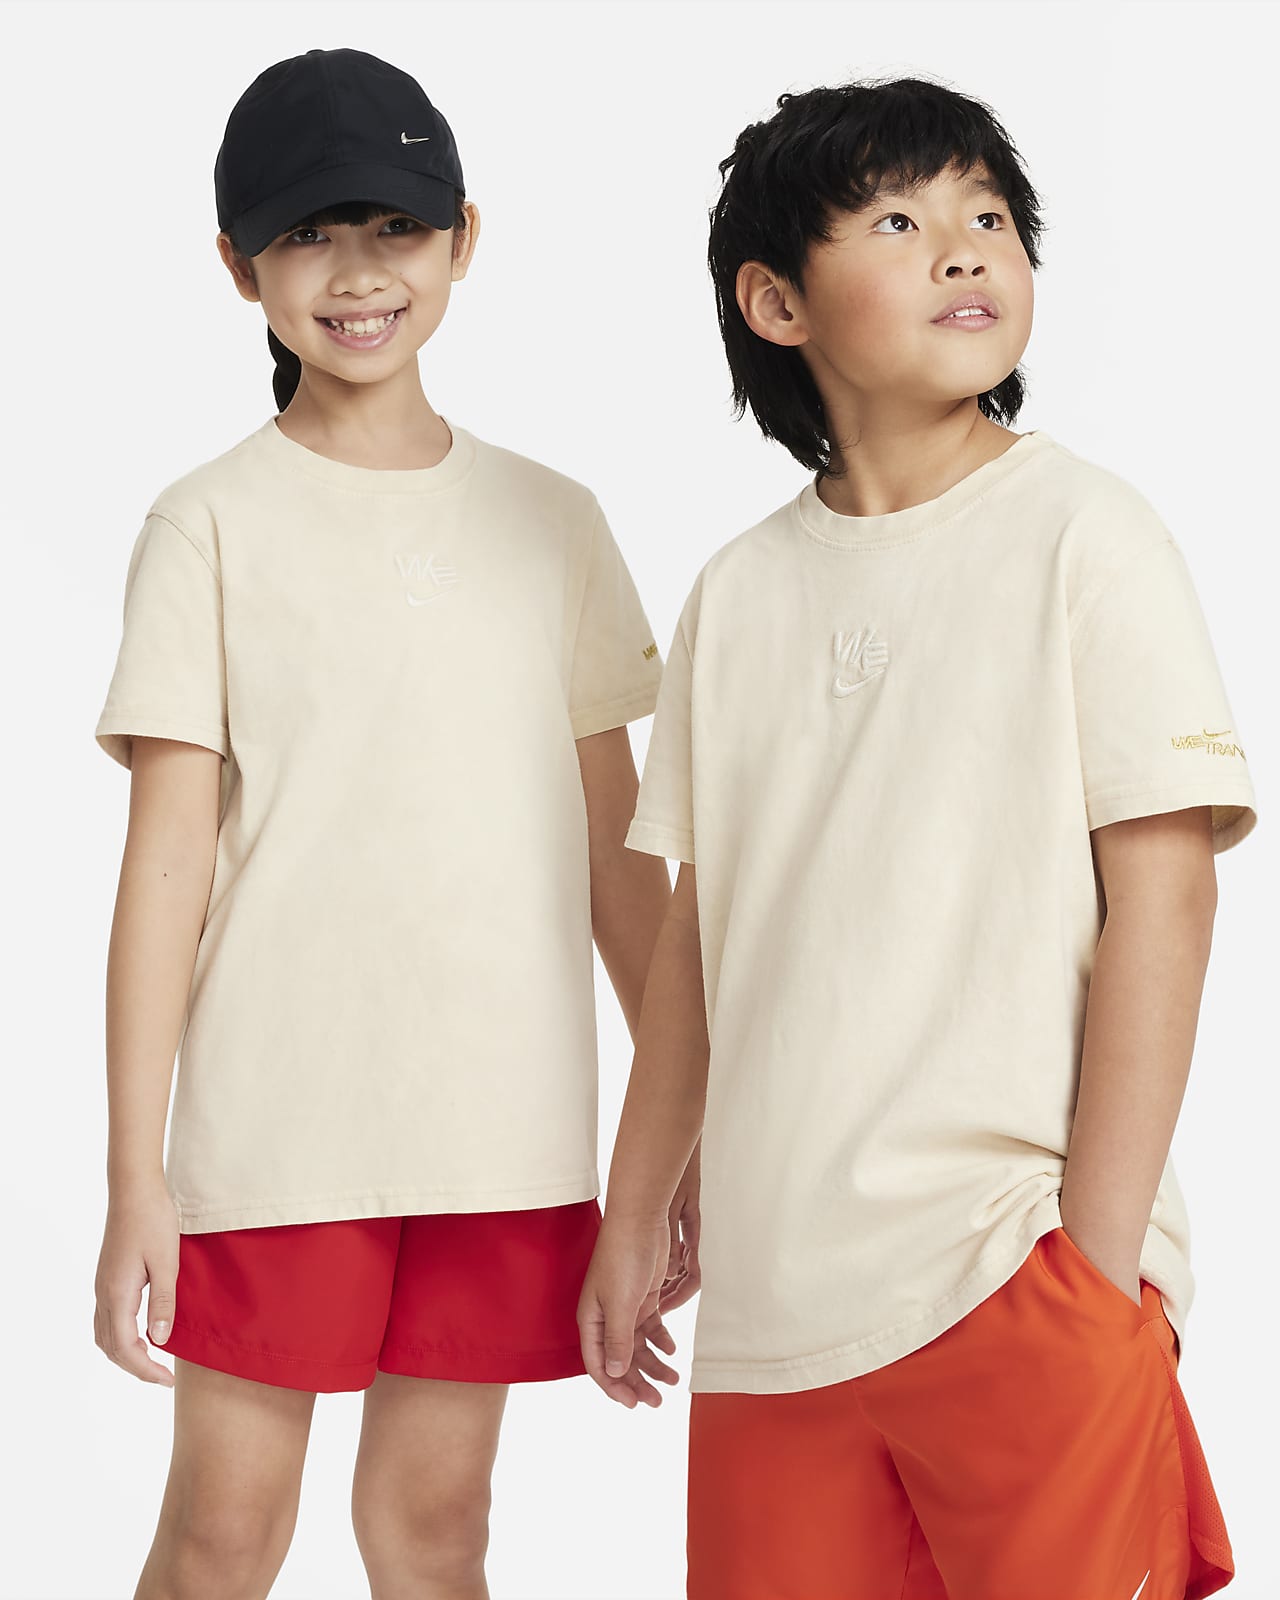 Nike "We Transcend" Big Kids' Max90 T-Shirt